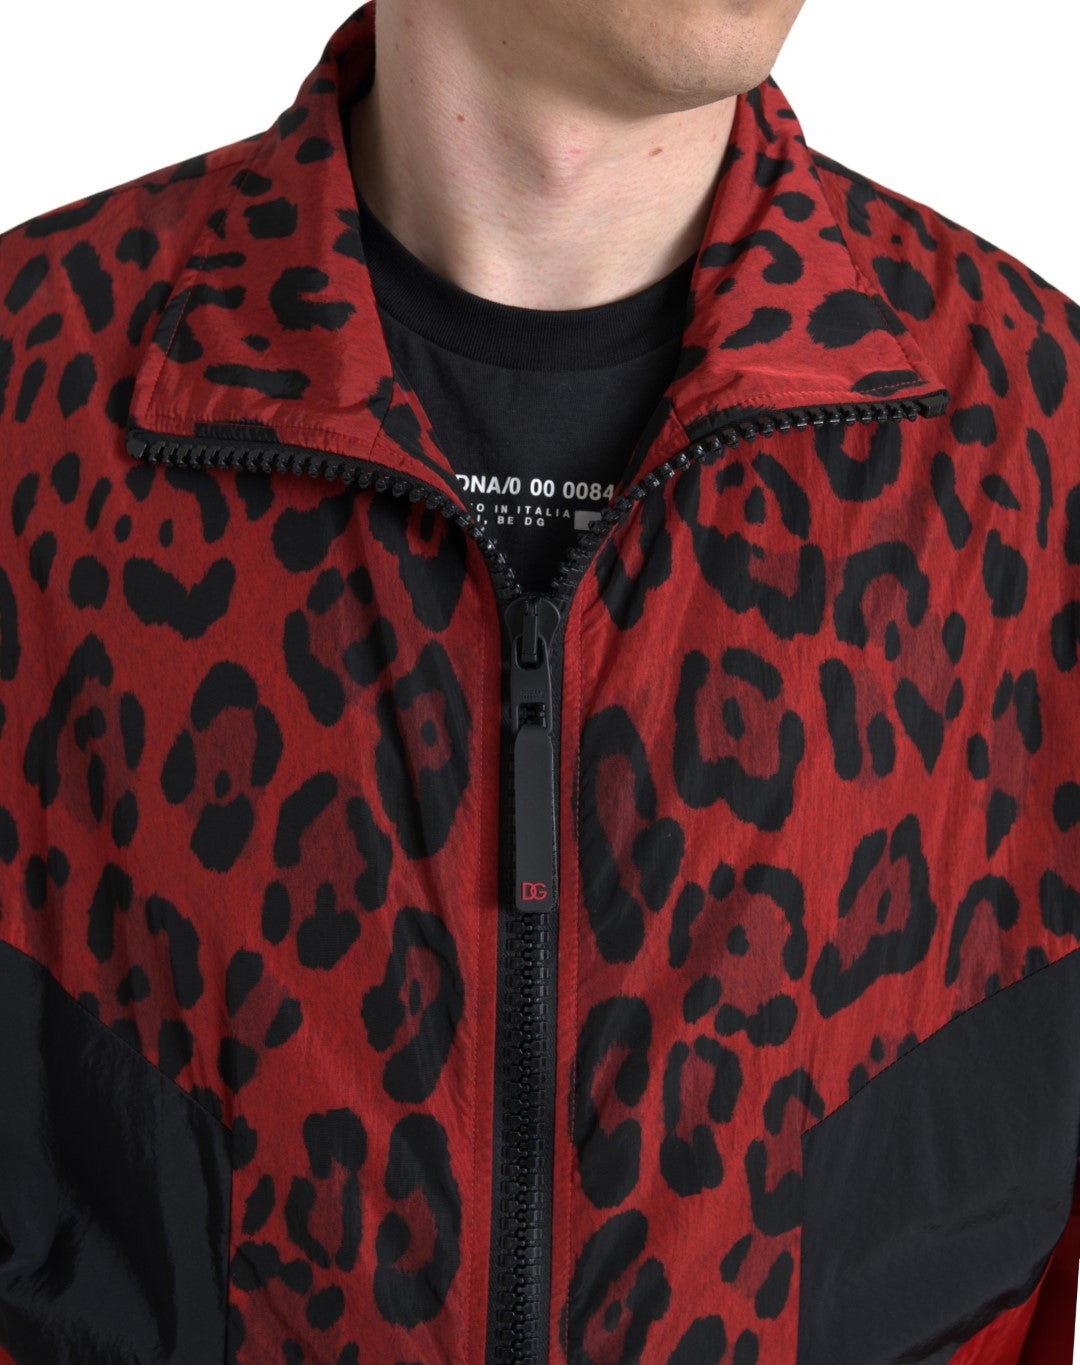 Dolce & Gabbana Red Leopard Zip Sweater Jacket